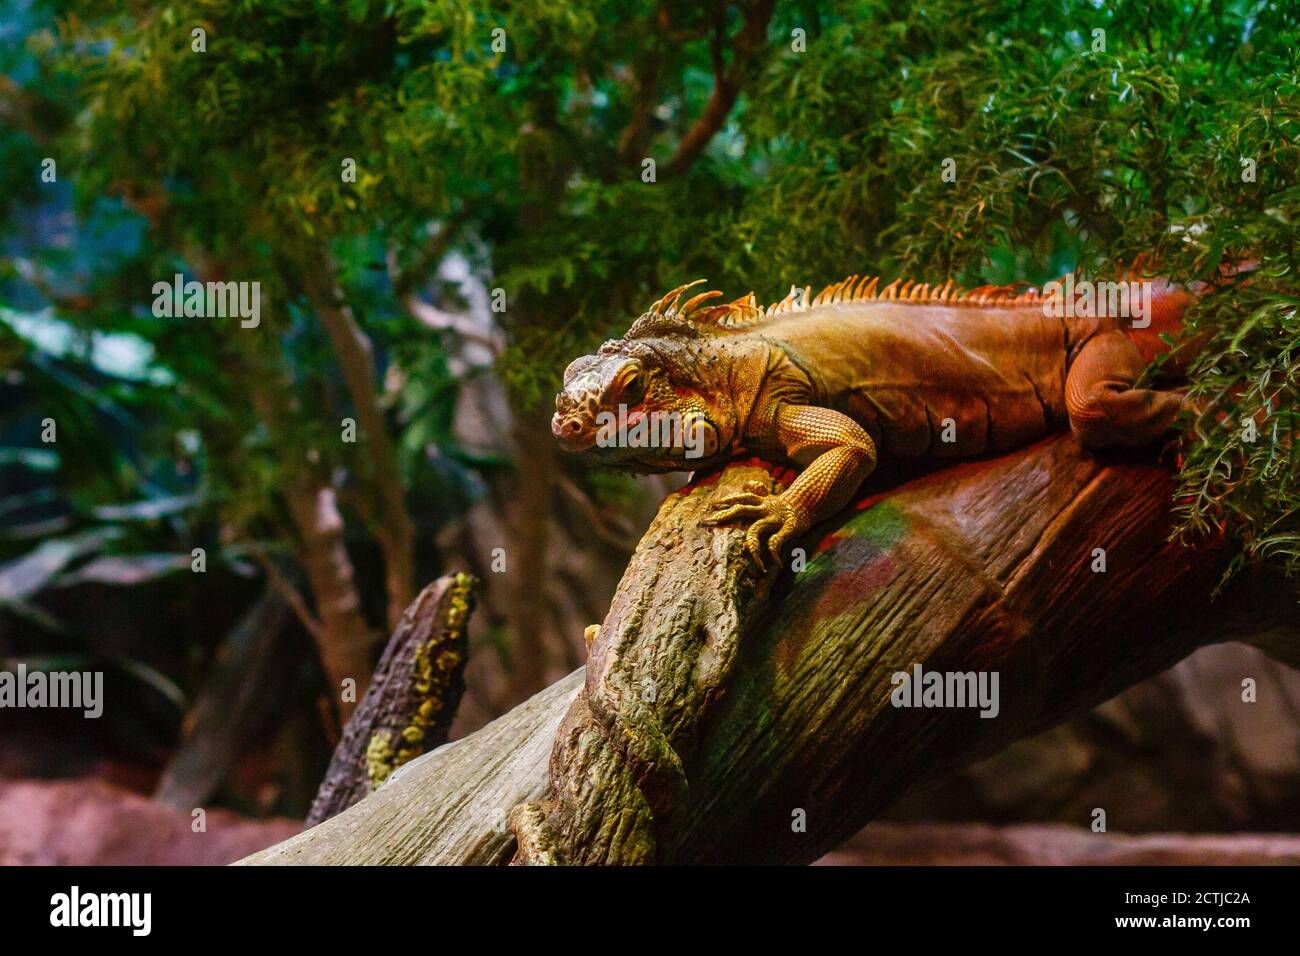 Sleeping dragon - Close-up portrait of a resting orange colored male Green iguana Stock Photo